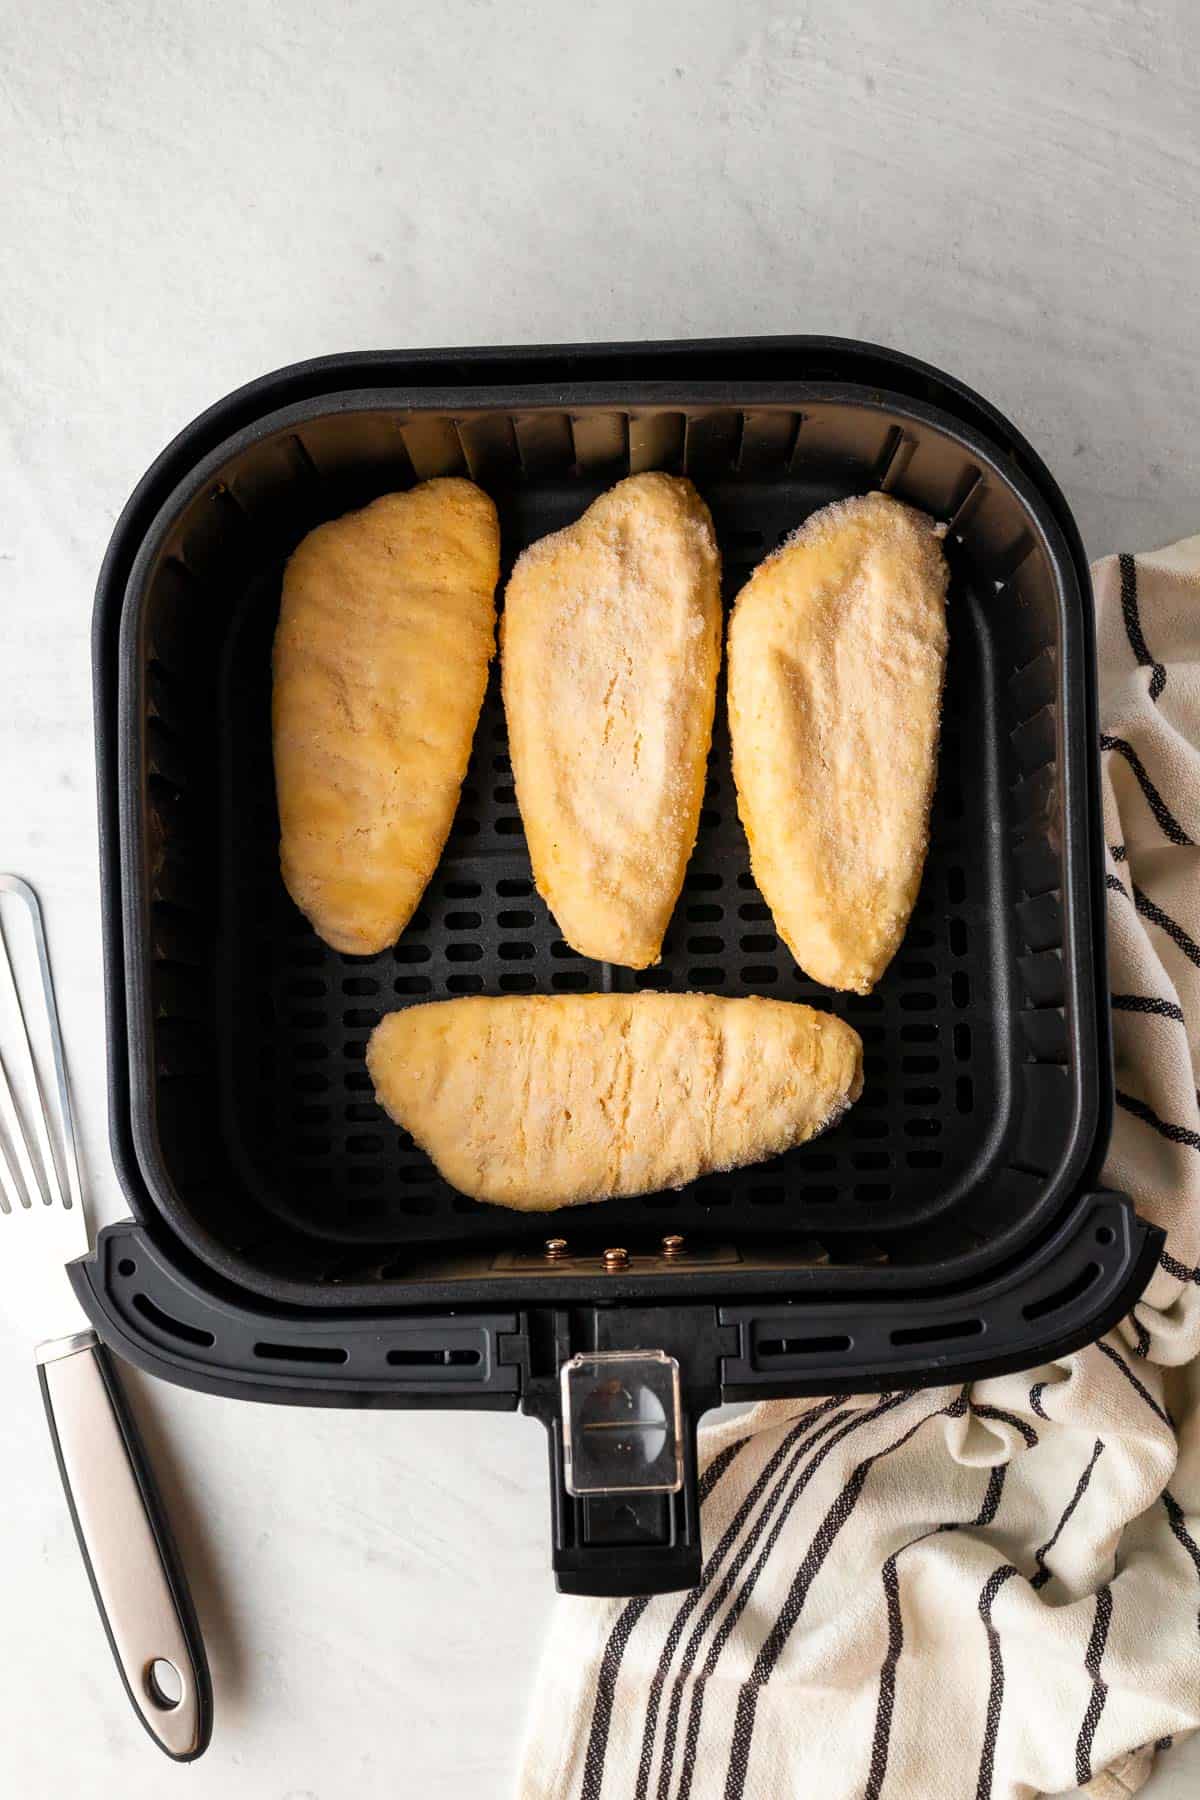 How To Cook Frozen Fish Fillet In Air Fryer | Storables